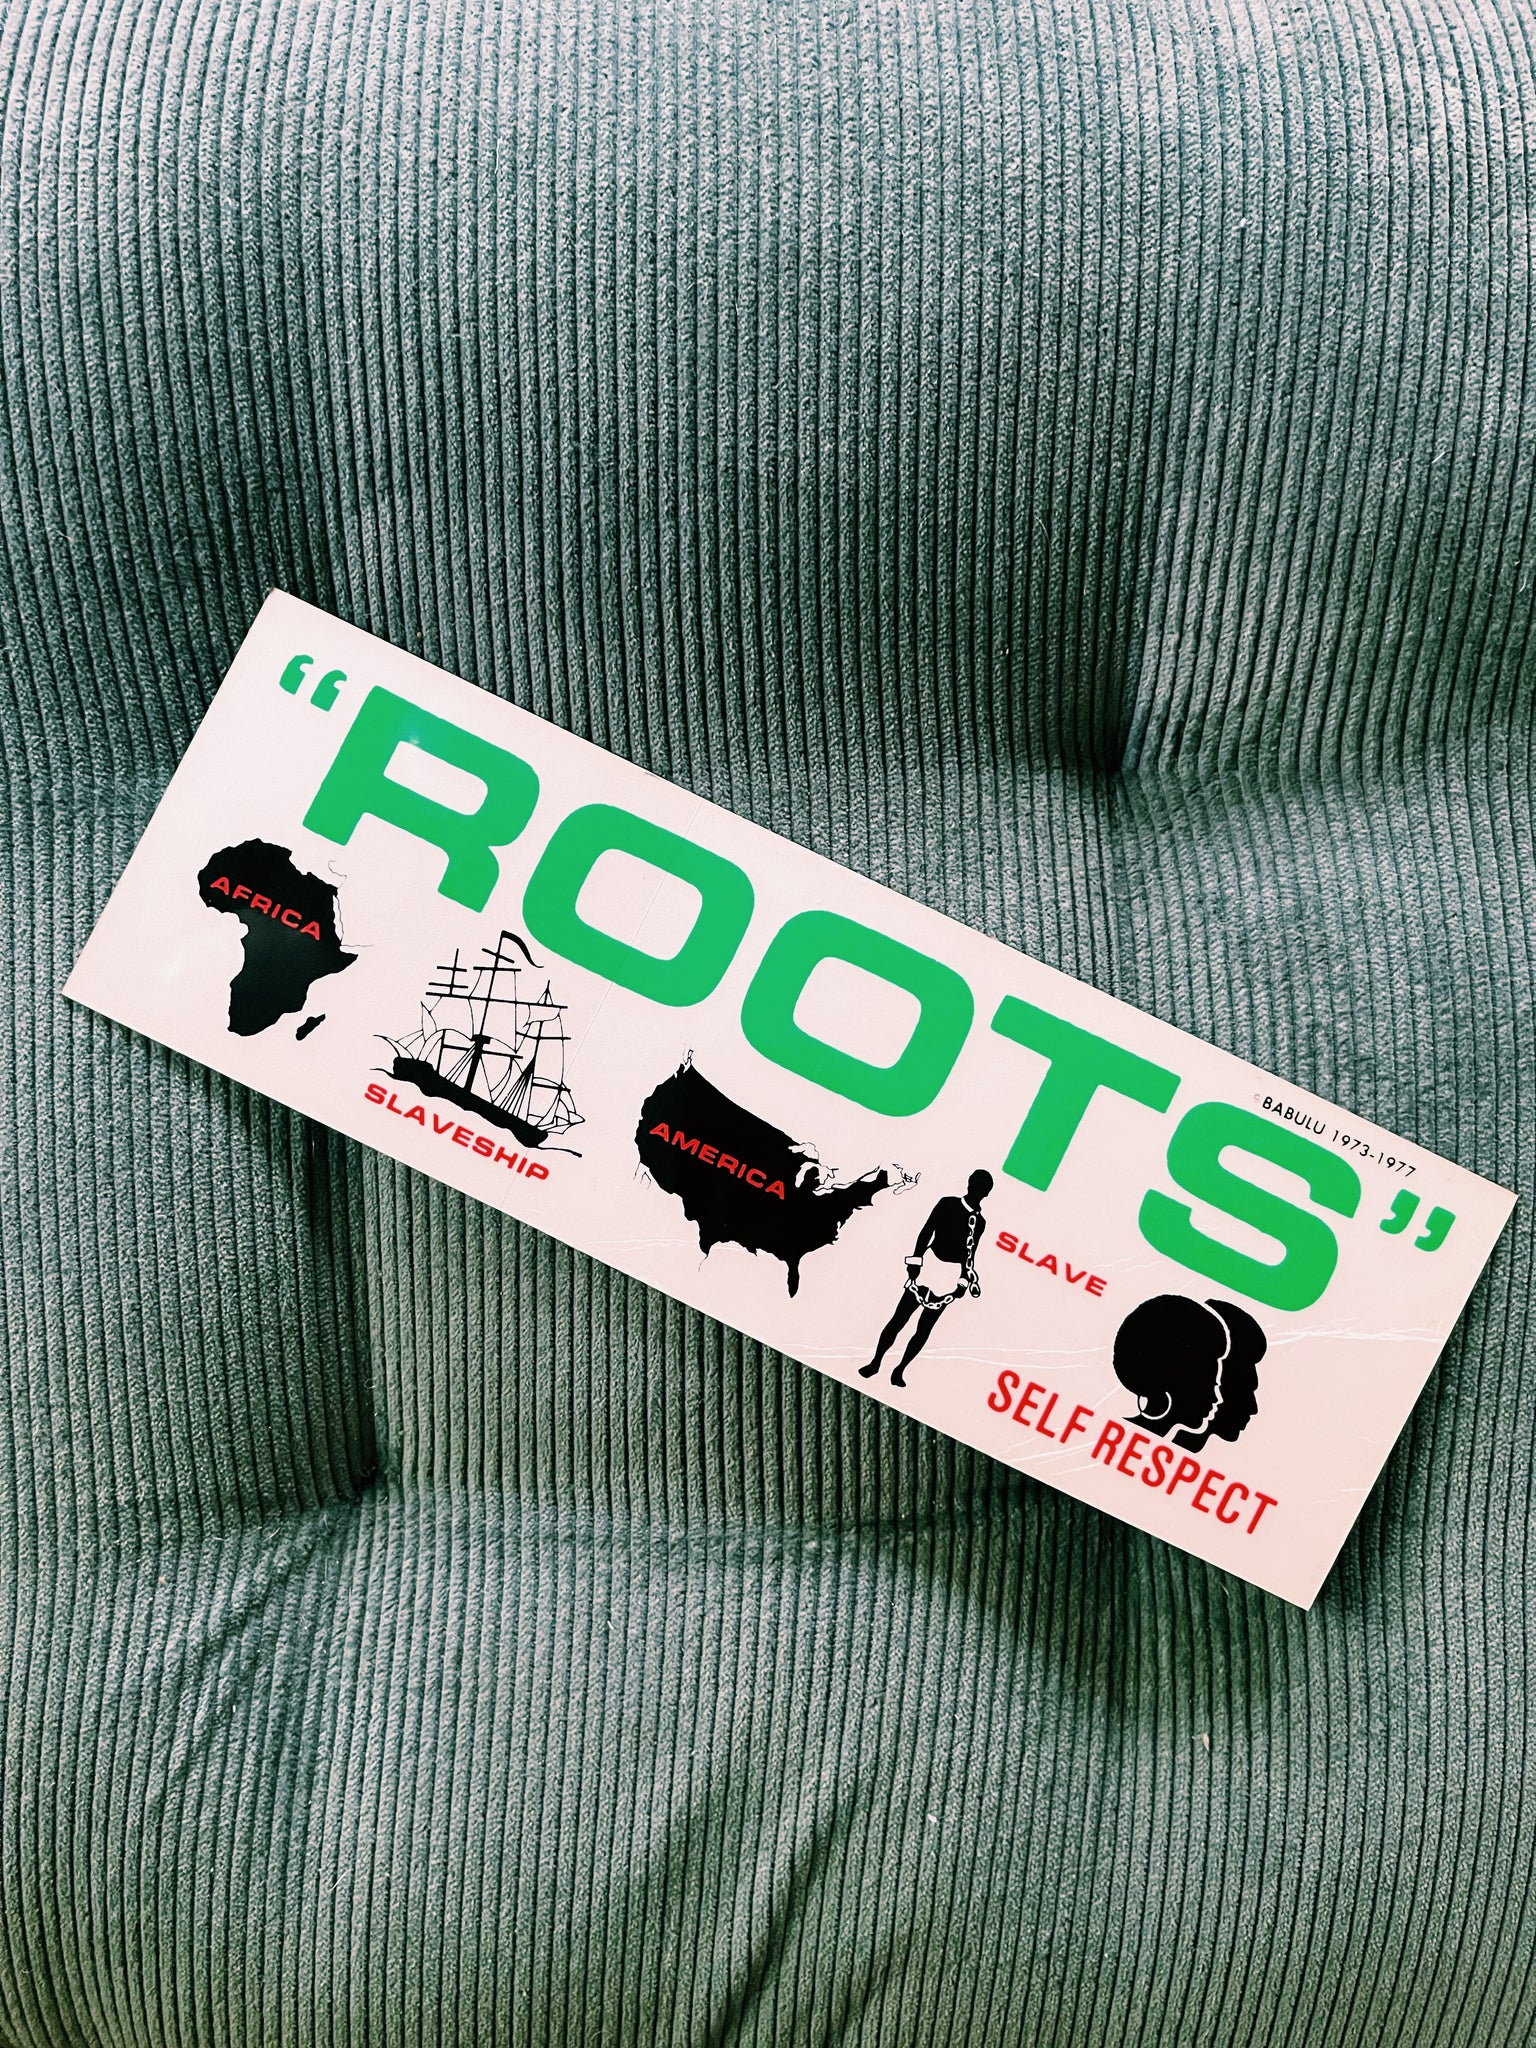 Vintage "Roots" Bumper Sticker (1977)